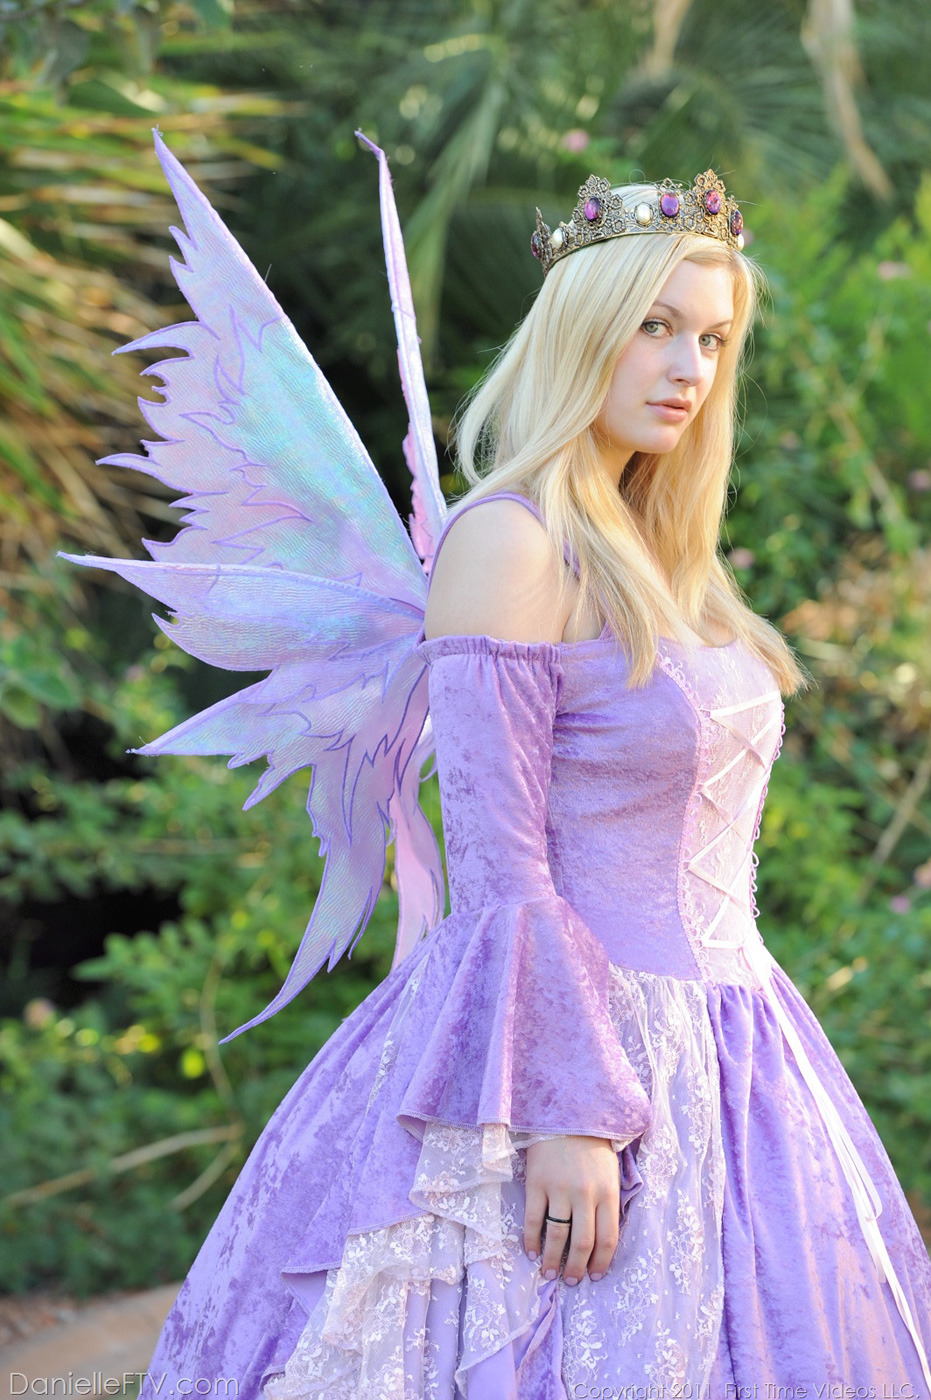 FTV Girl Danielle Purple Angel Queen - Pic #21